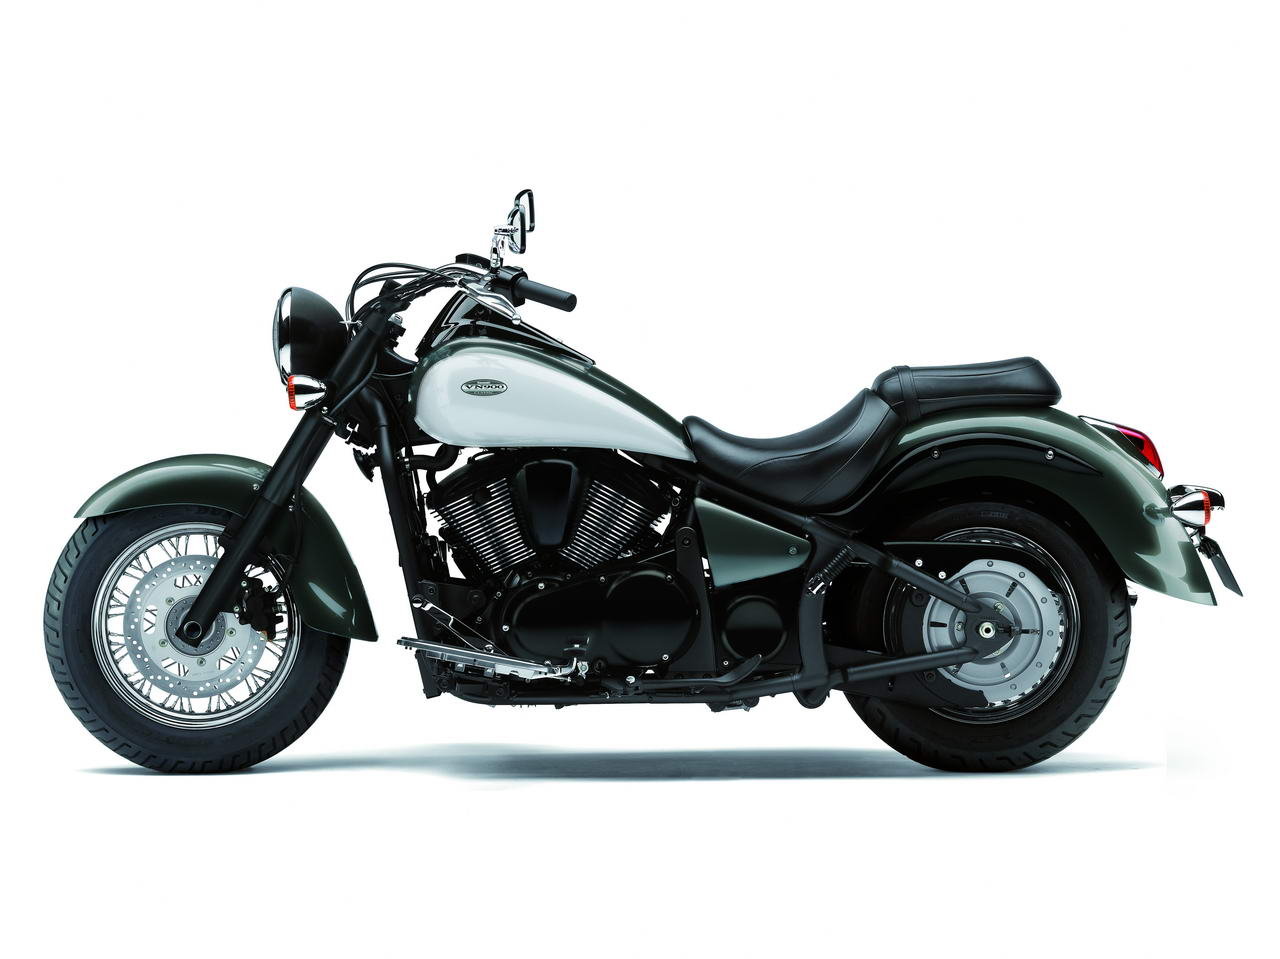 Listino Kawasaki W 800 Naked Mediand - image 15534_kawasaki-vn1700-voyager-custom on https://moto.motori.net